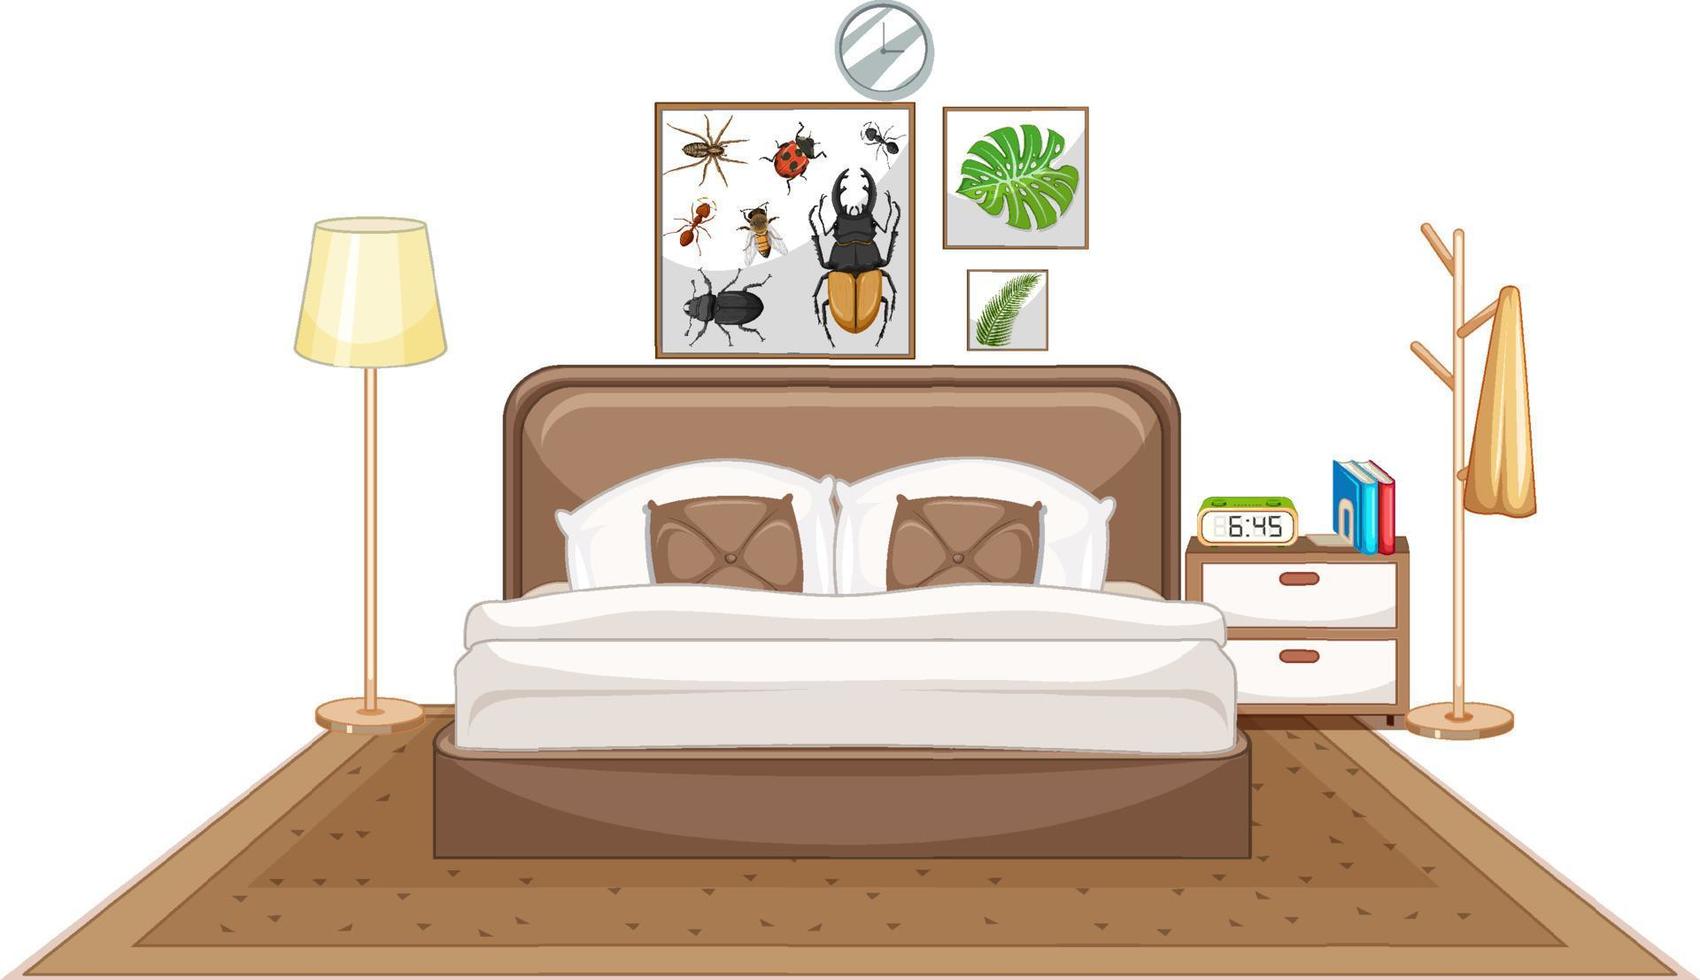 Bedroom furniture set on white background vector